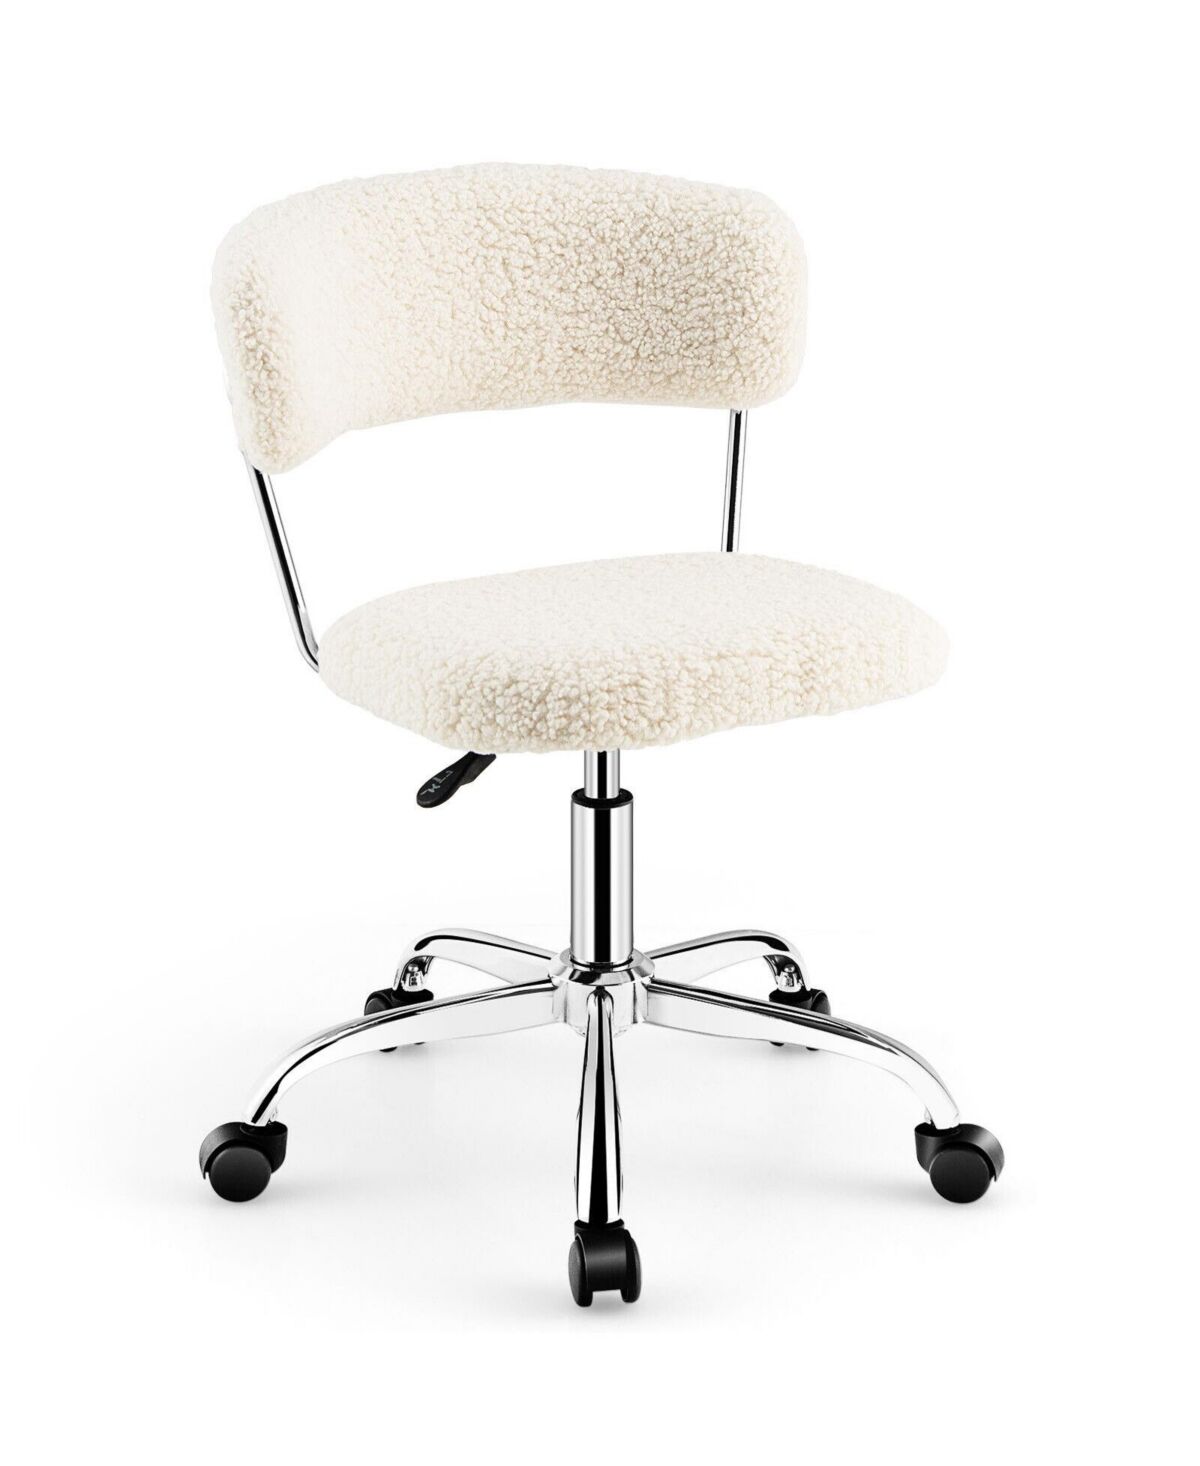 Slickblue Computer Desk Chair Adjustable Sherpa Office Chair Swivel Vanity Chair - White